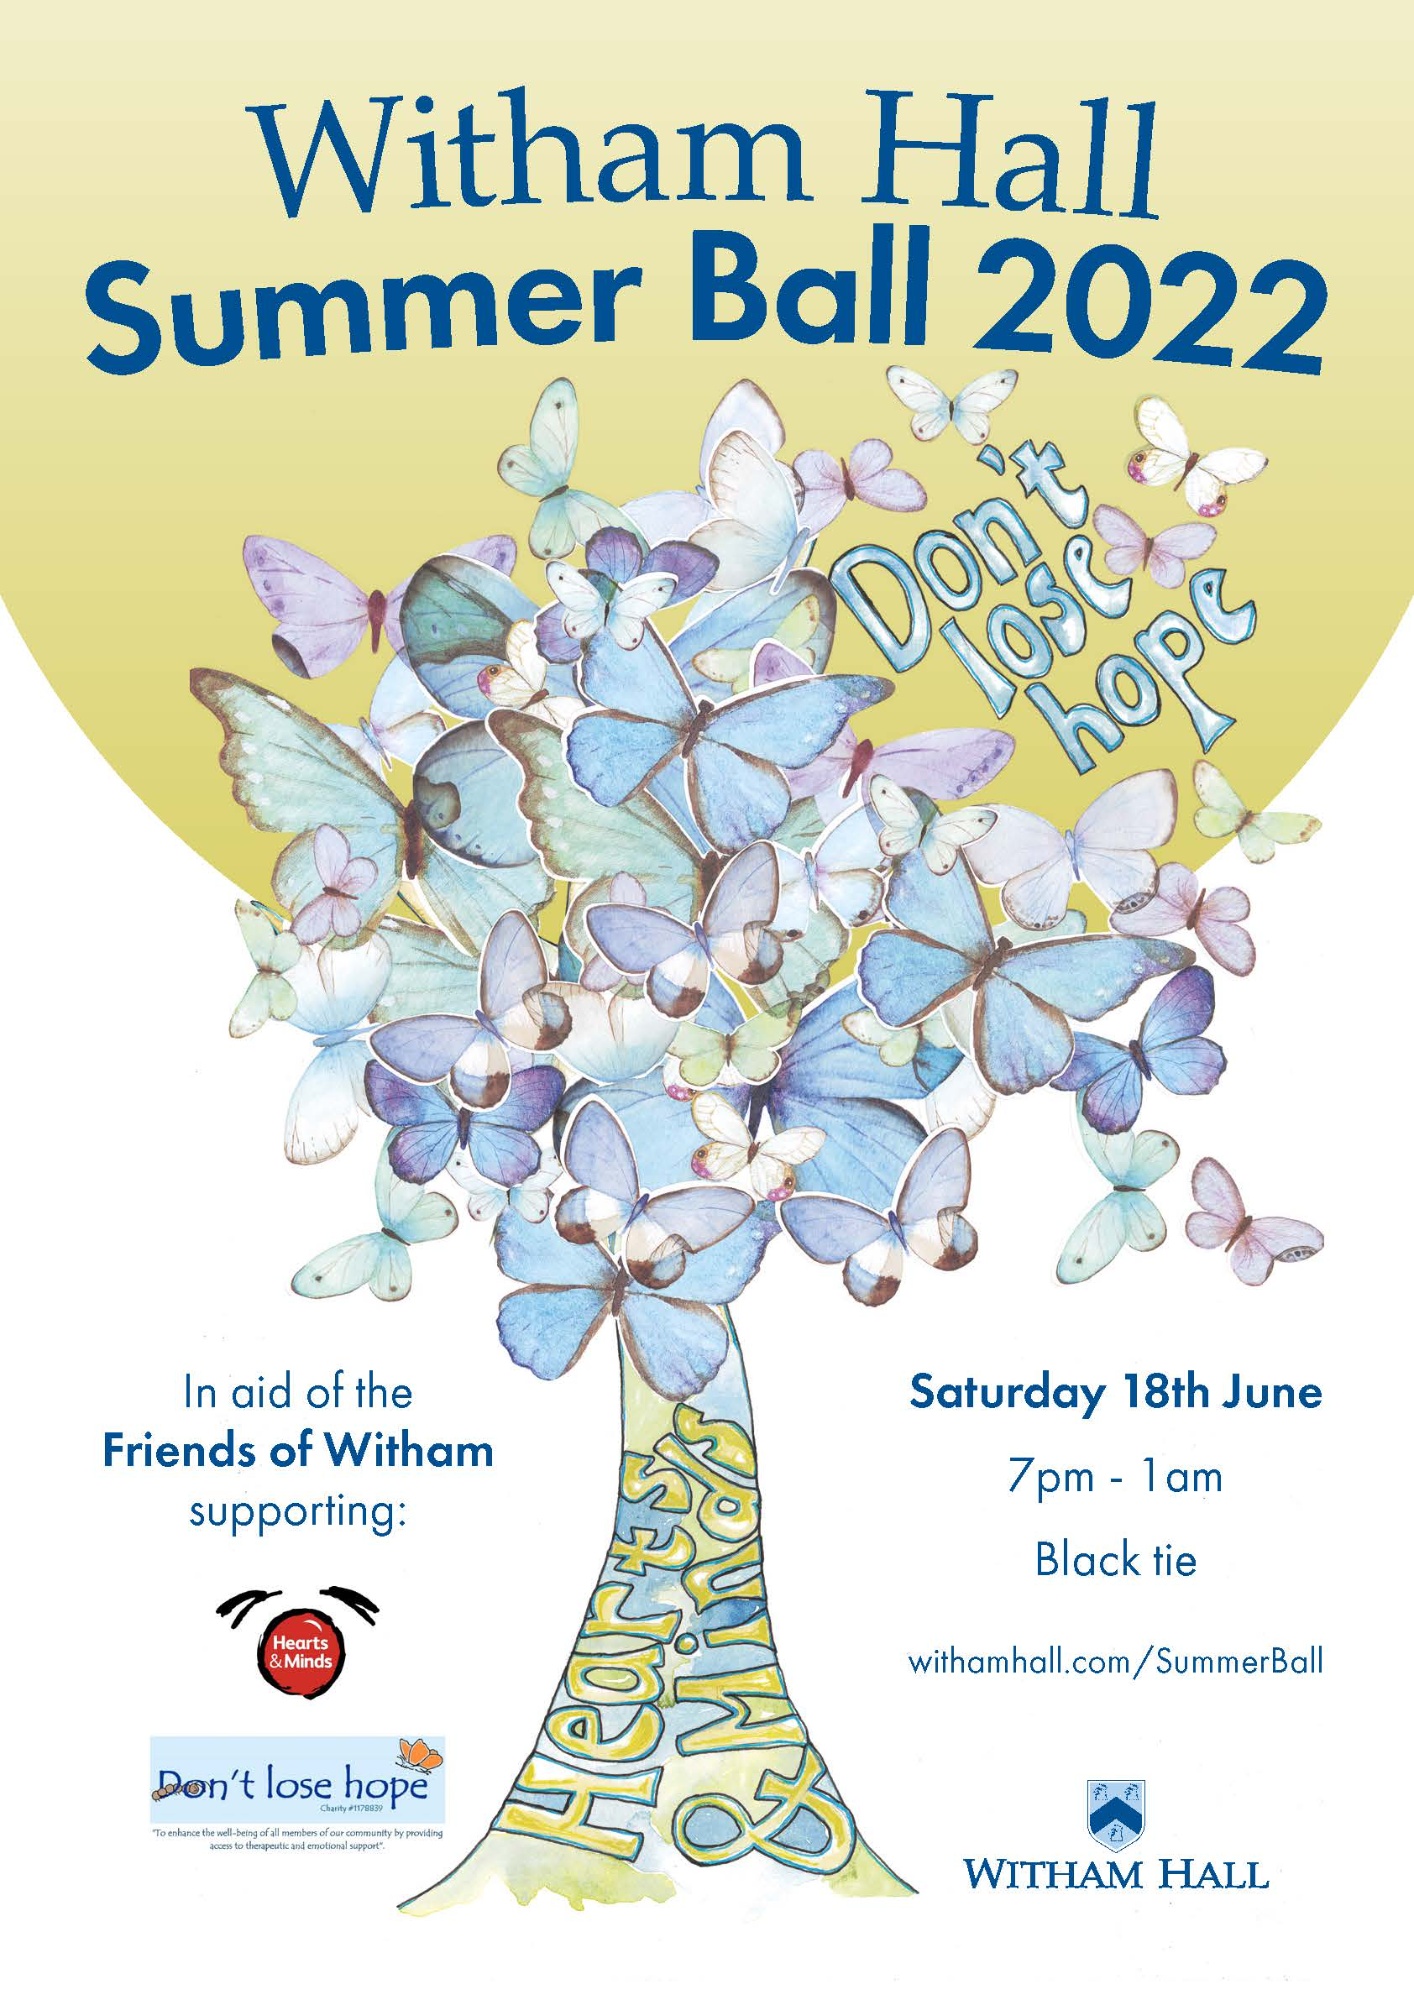 Witham Hall Summer Ball 2022